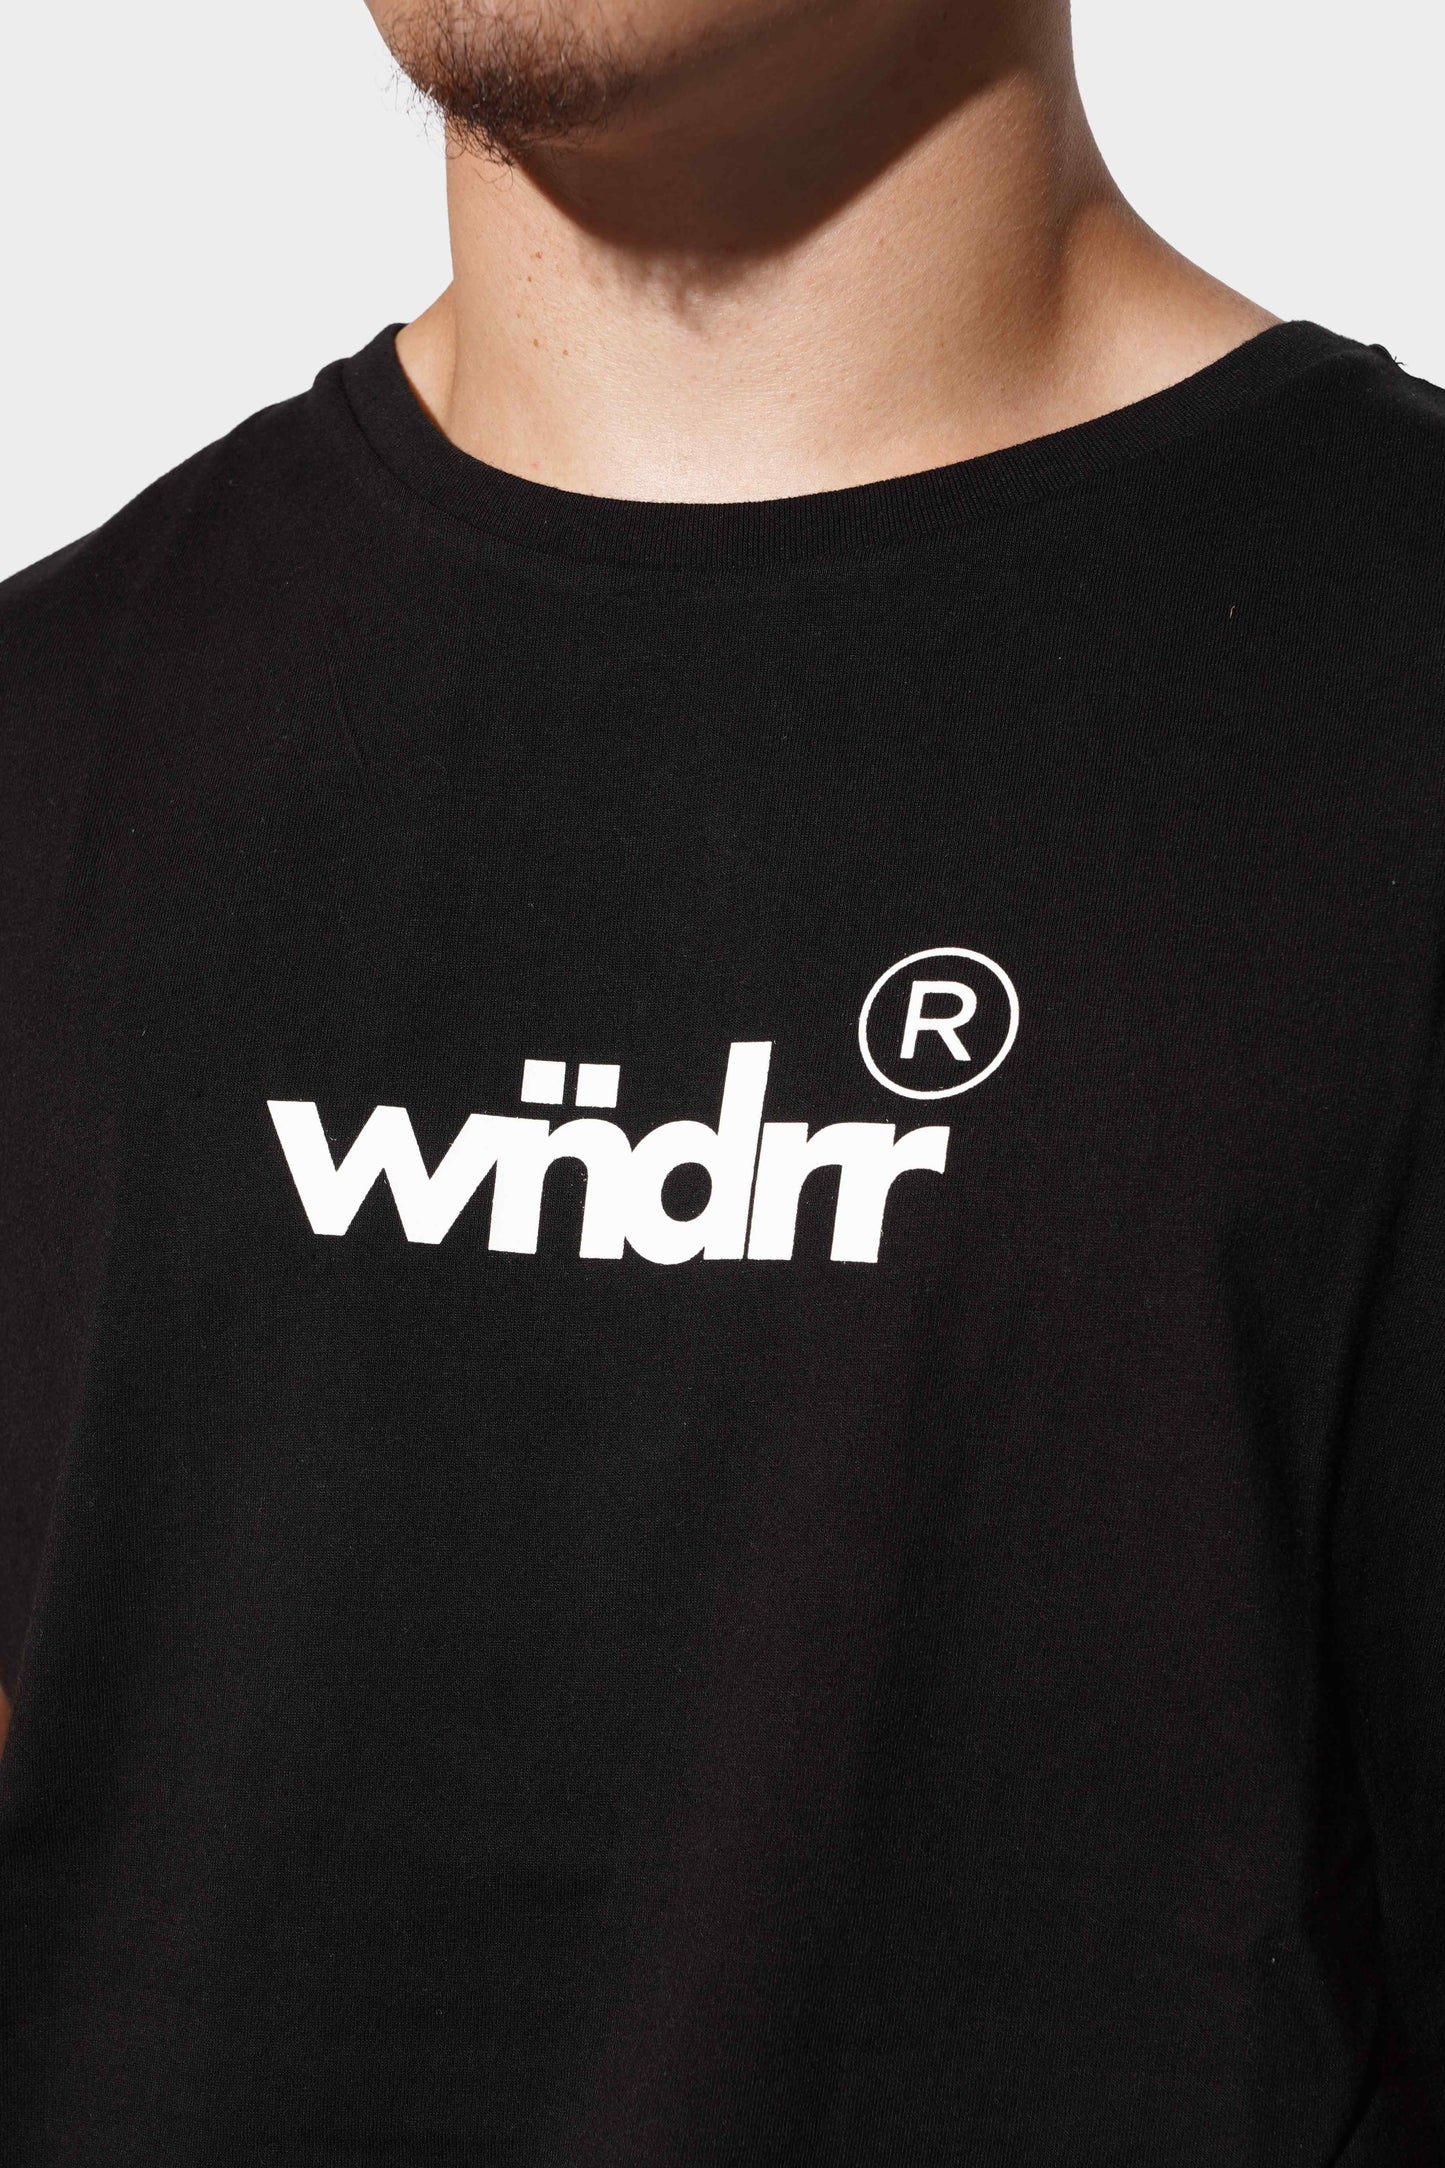 WNDRR Accent Muscle Top Black